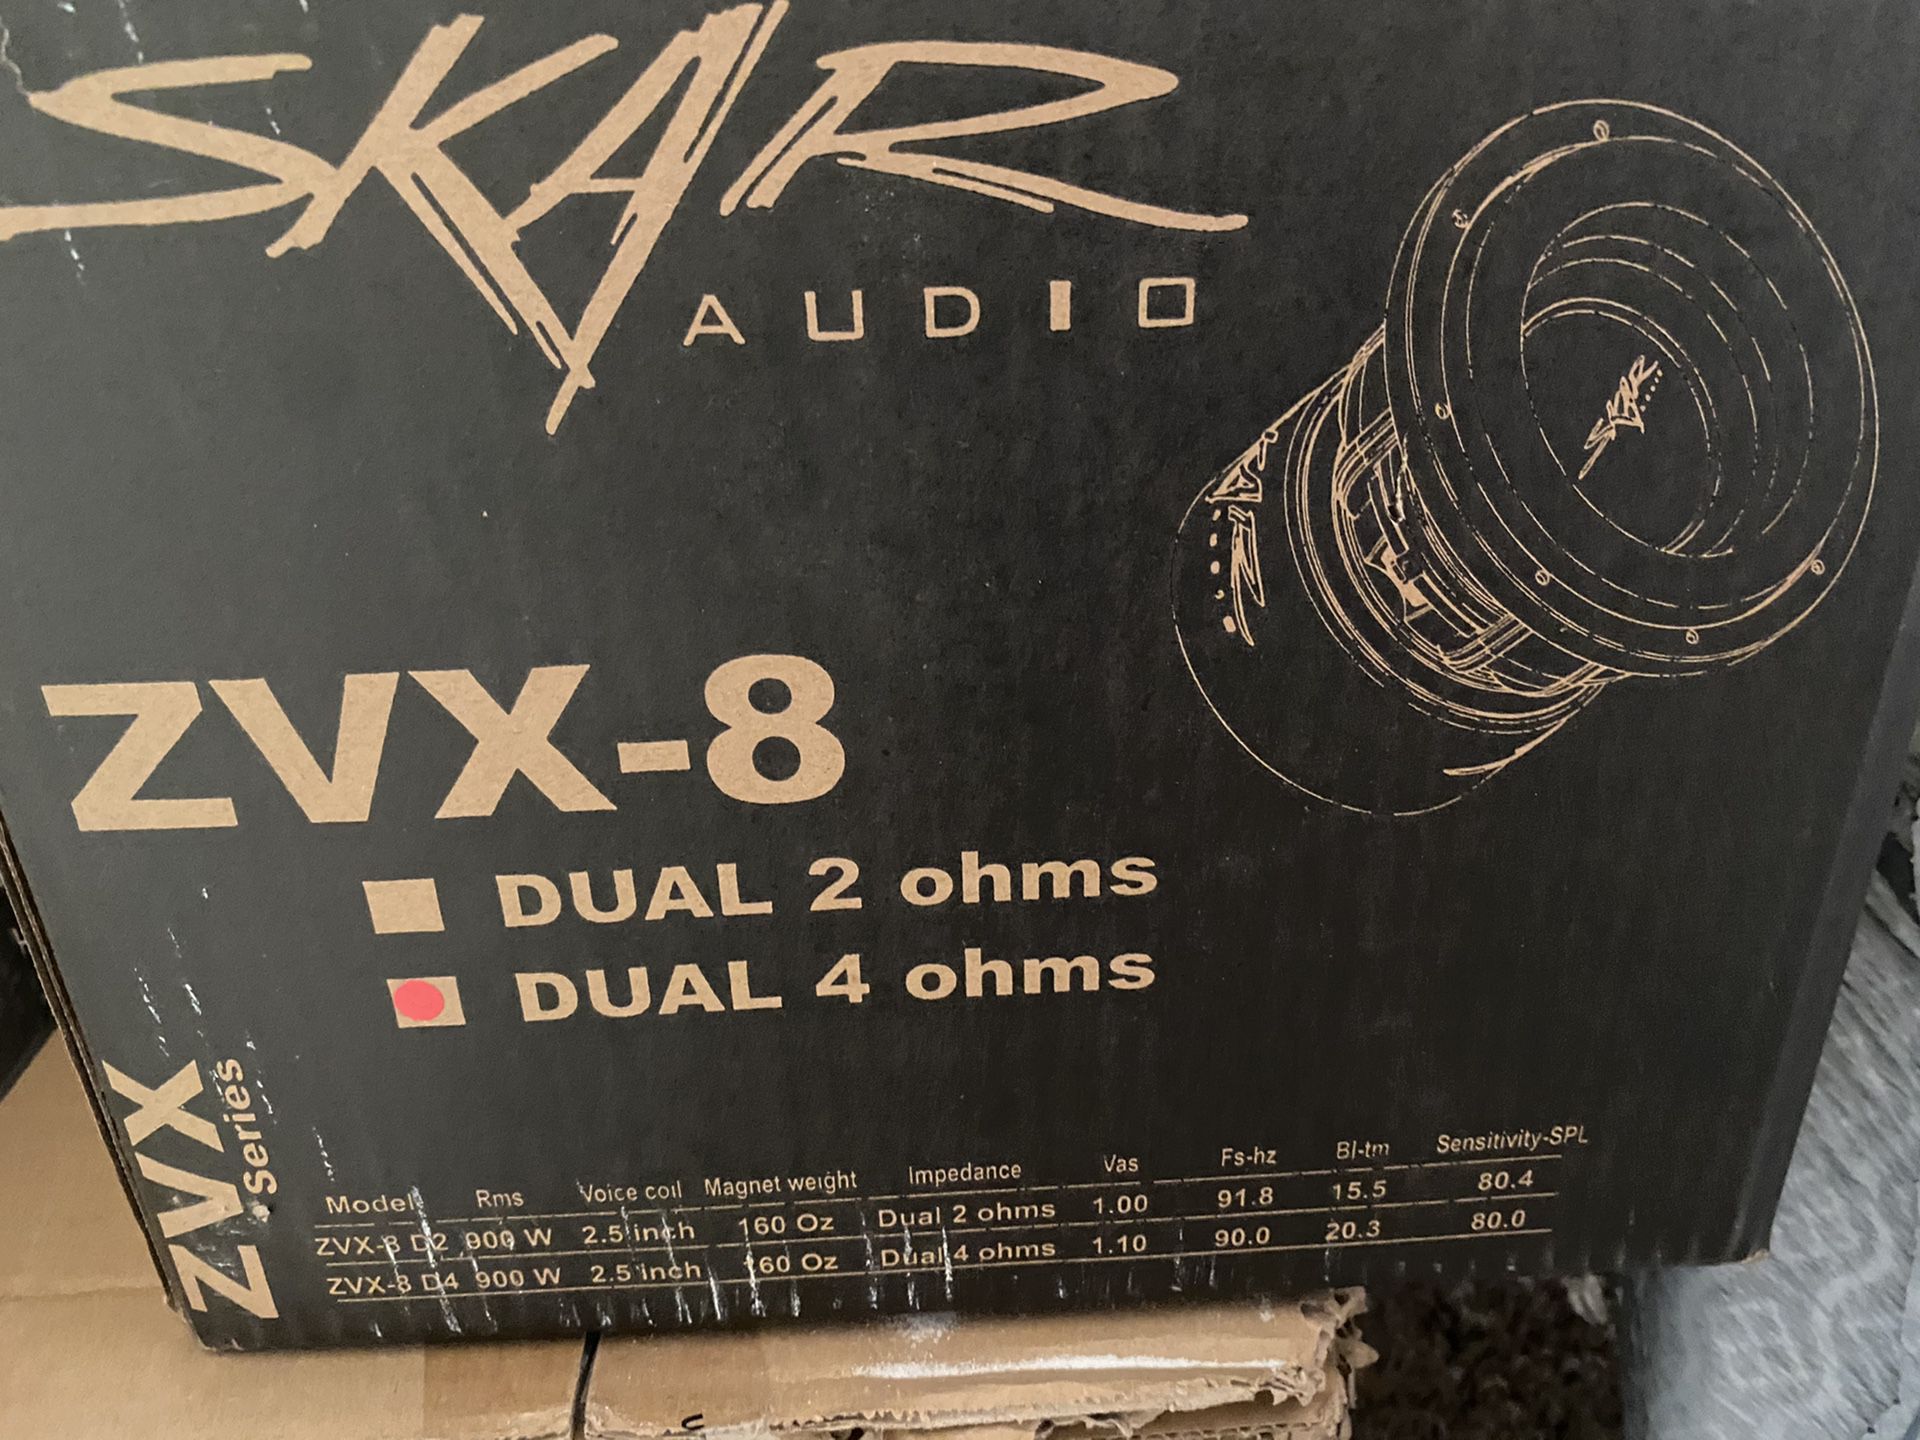 Skar Audio ZVX -8” subs Dual 4 ohms